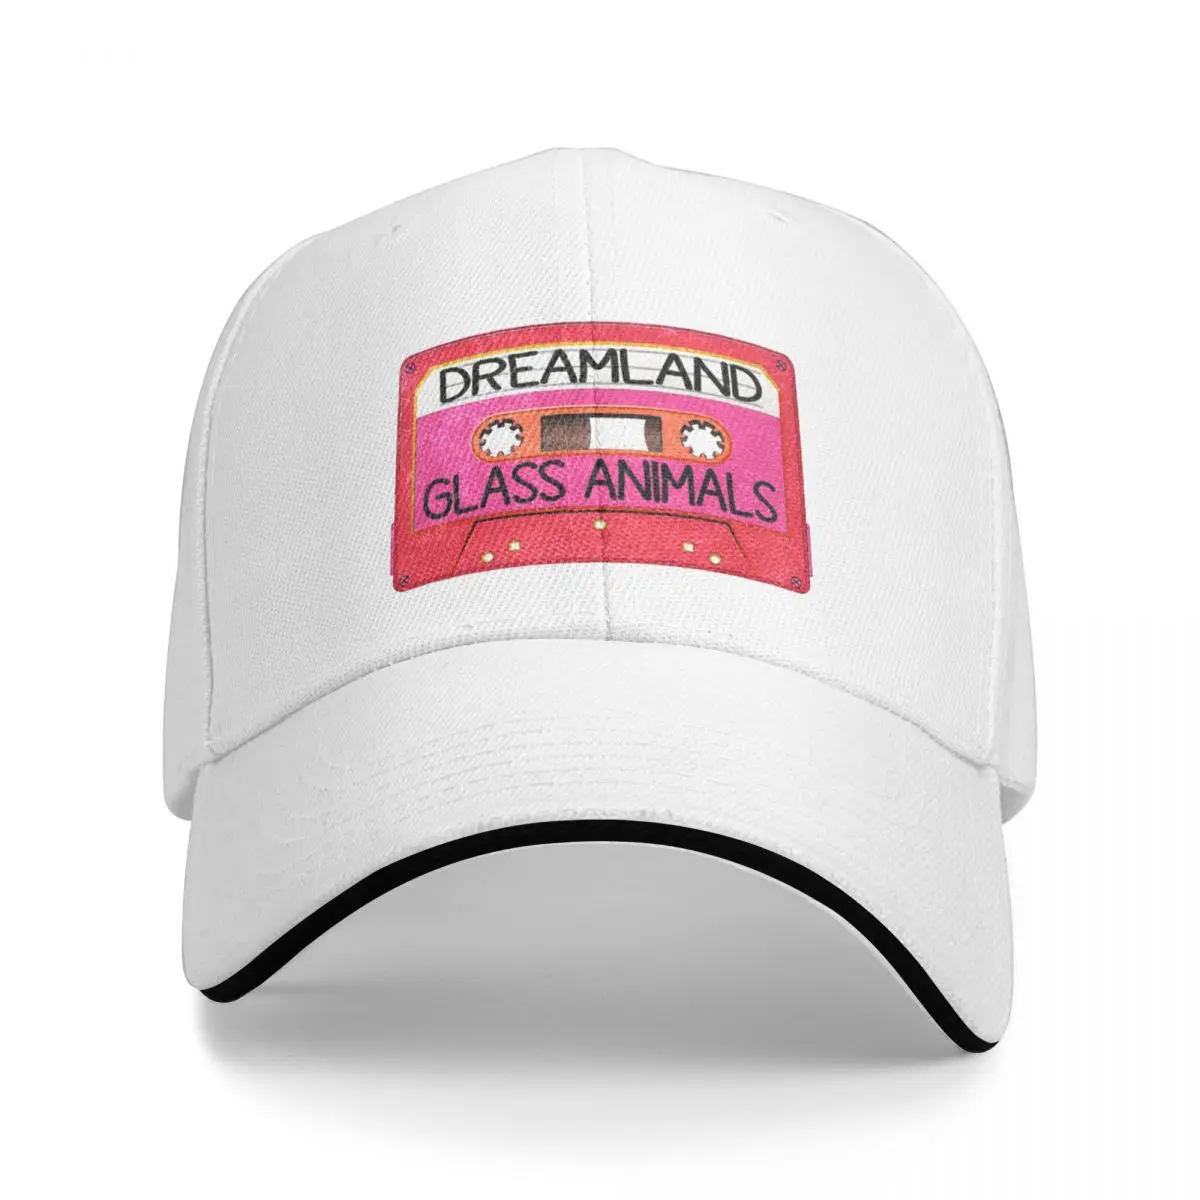 

Vintage Retro Casette Glass Animals Dreamland Cap Baseball Cap trucker hat Golf wear men hats Women's